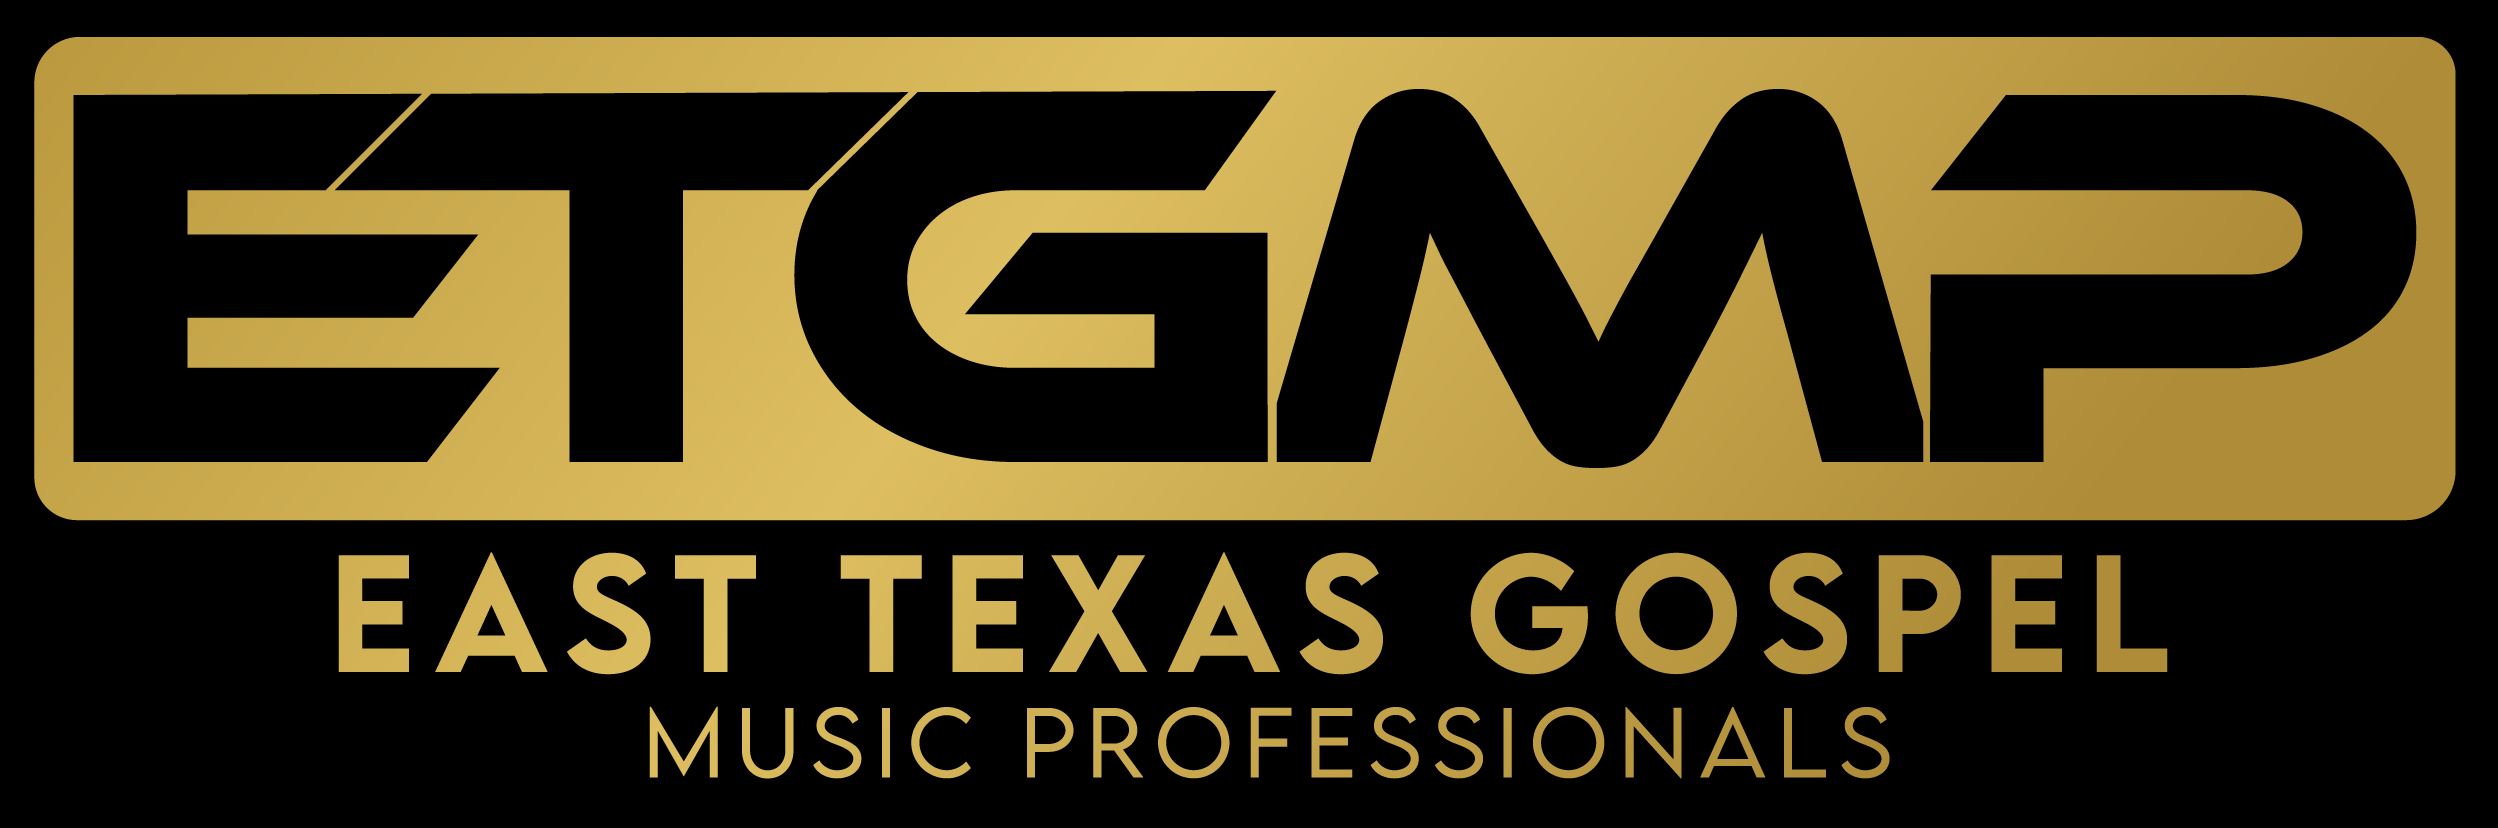 East Texas Gospel Music Professionals